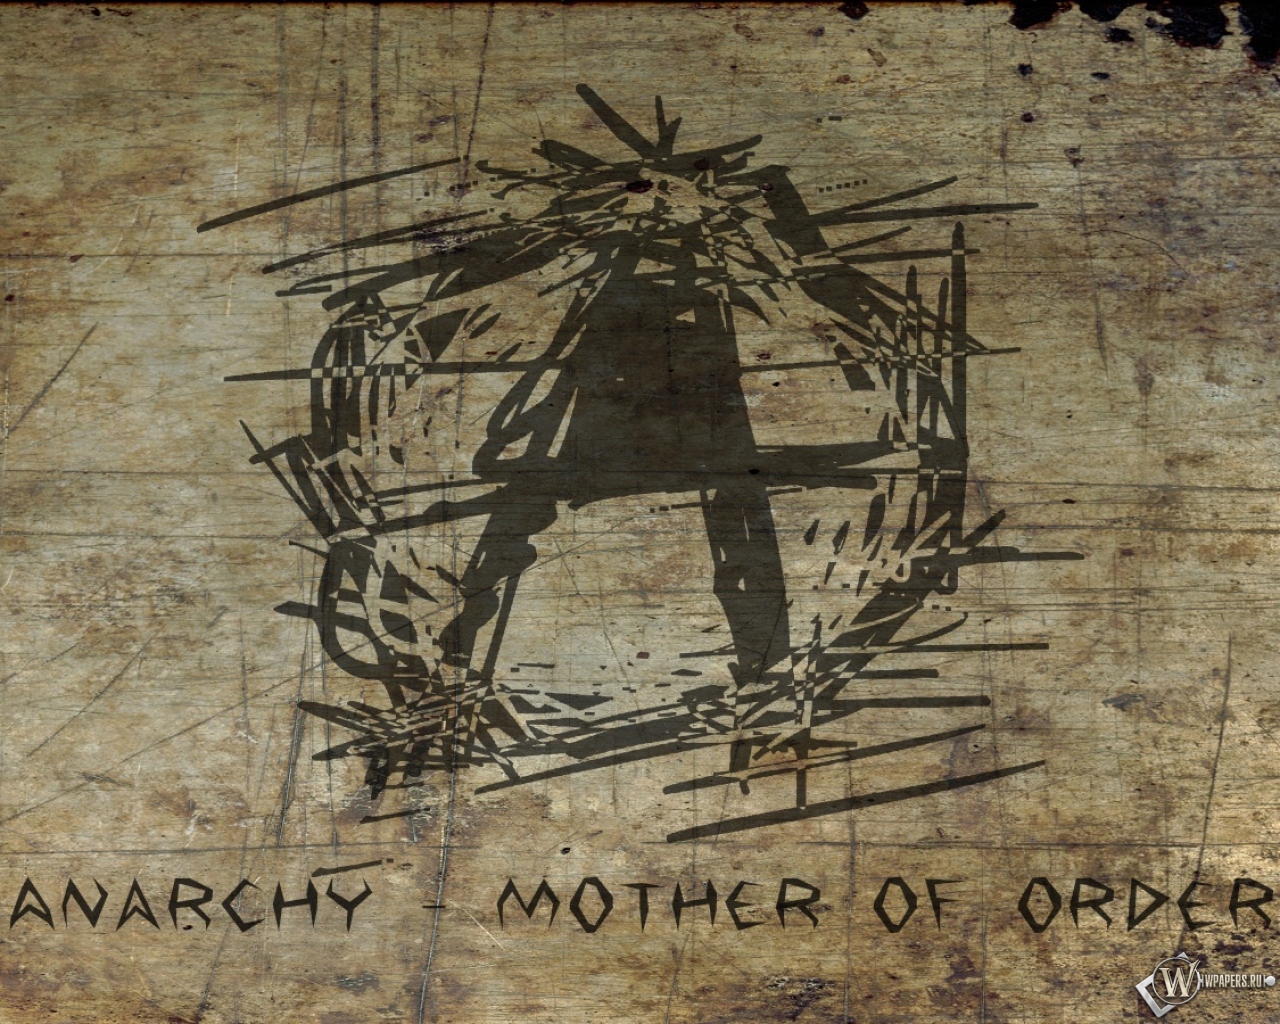 Anacrhy - Mother of Order  1280x1024